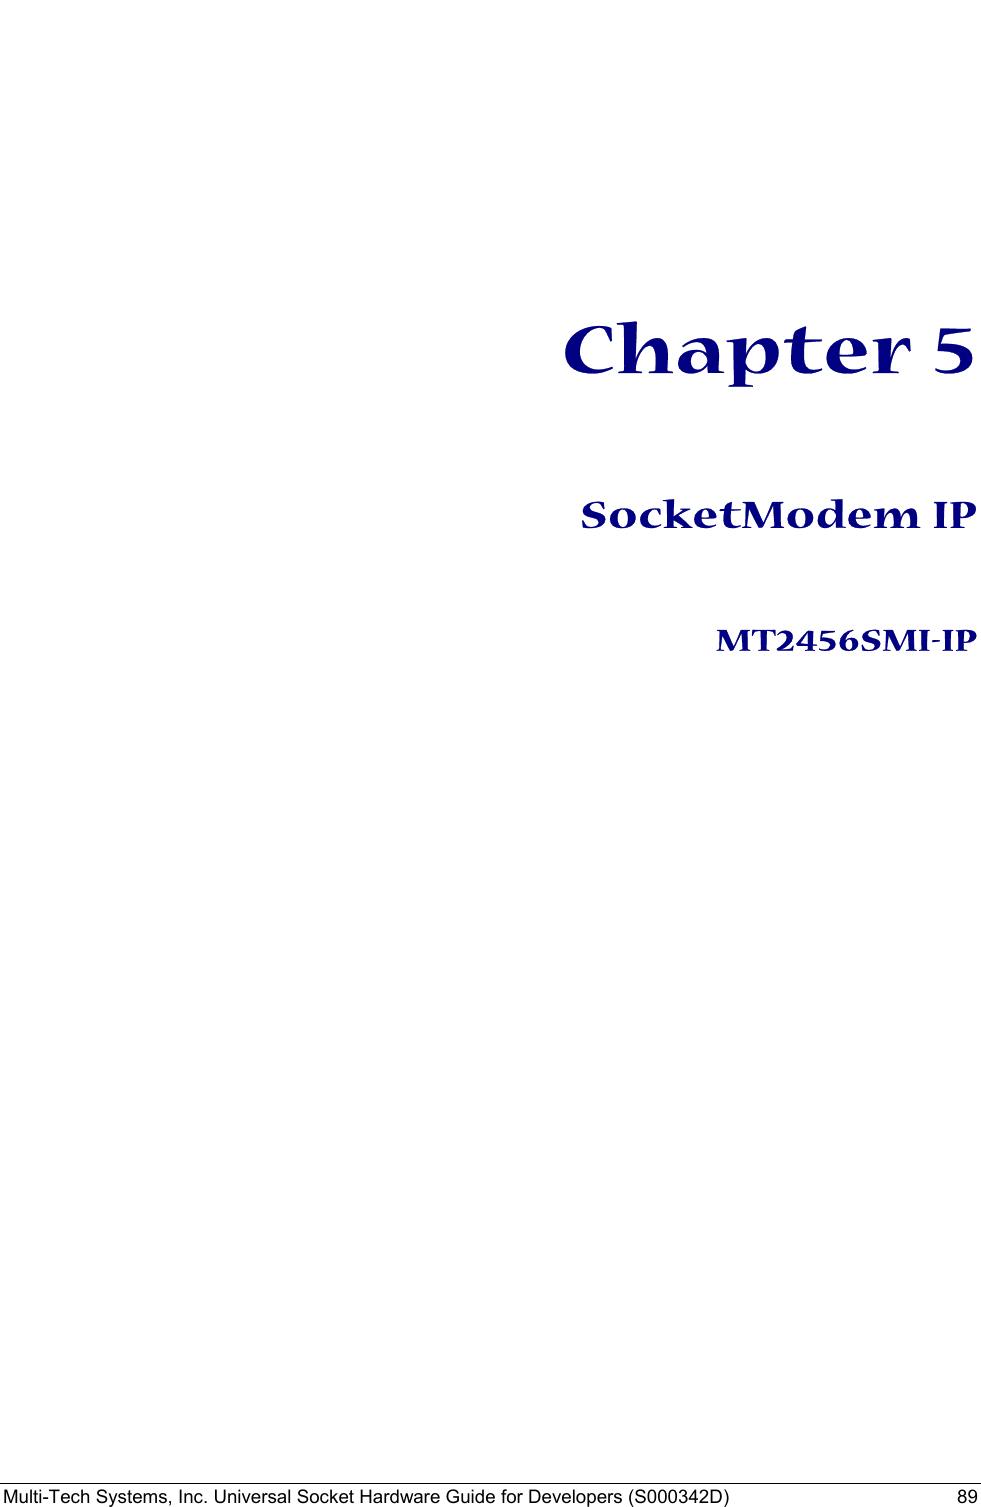  Multi-Tech Systems, Inc. Universal Socket Hardware Guide for Developers (S000342D)  89      Chapter 5   SocketModem IP   MT2456SMI-IP    